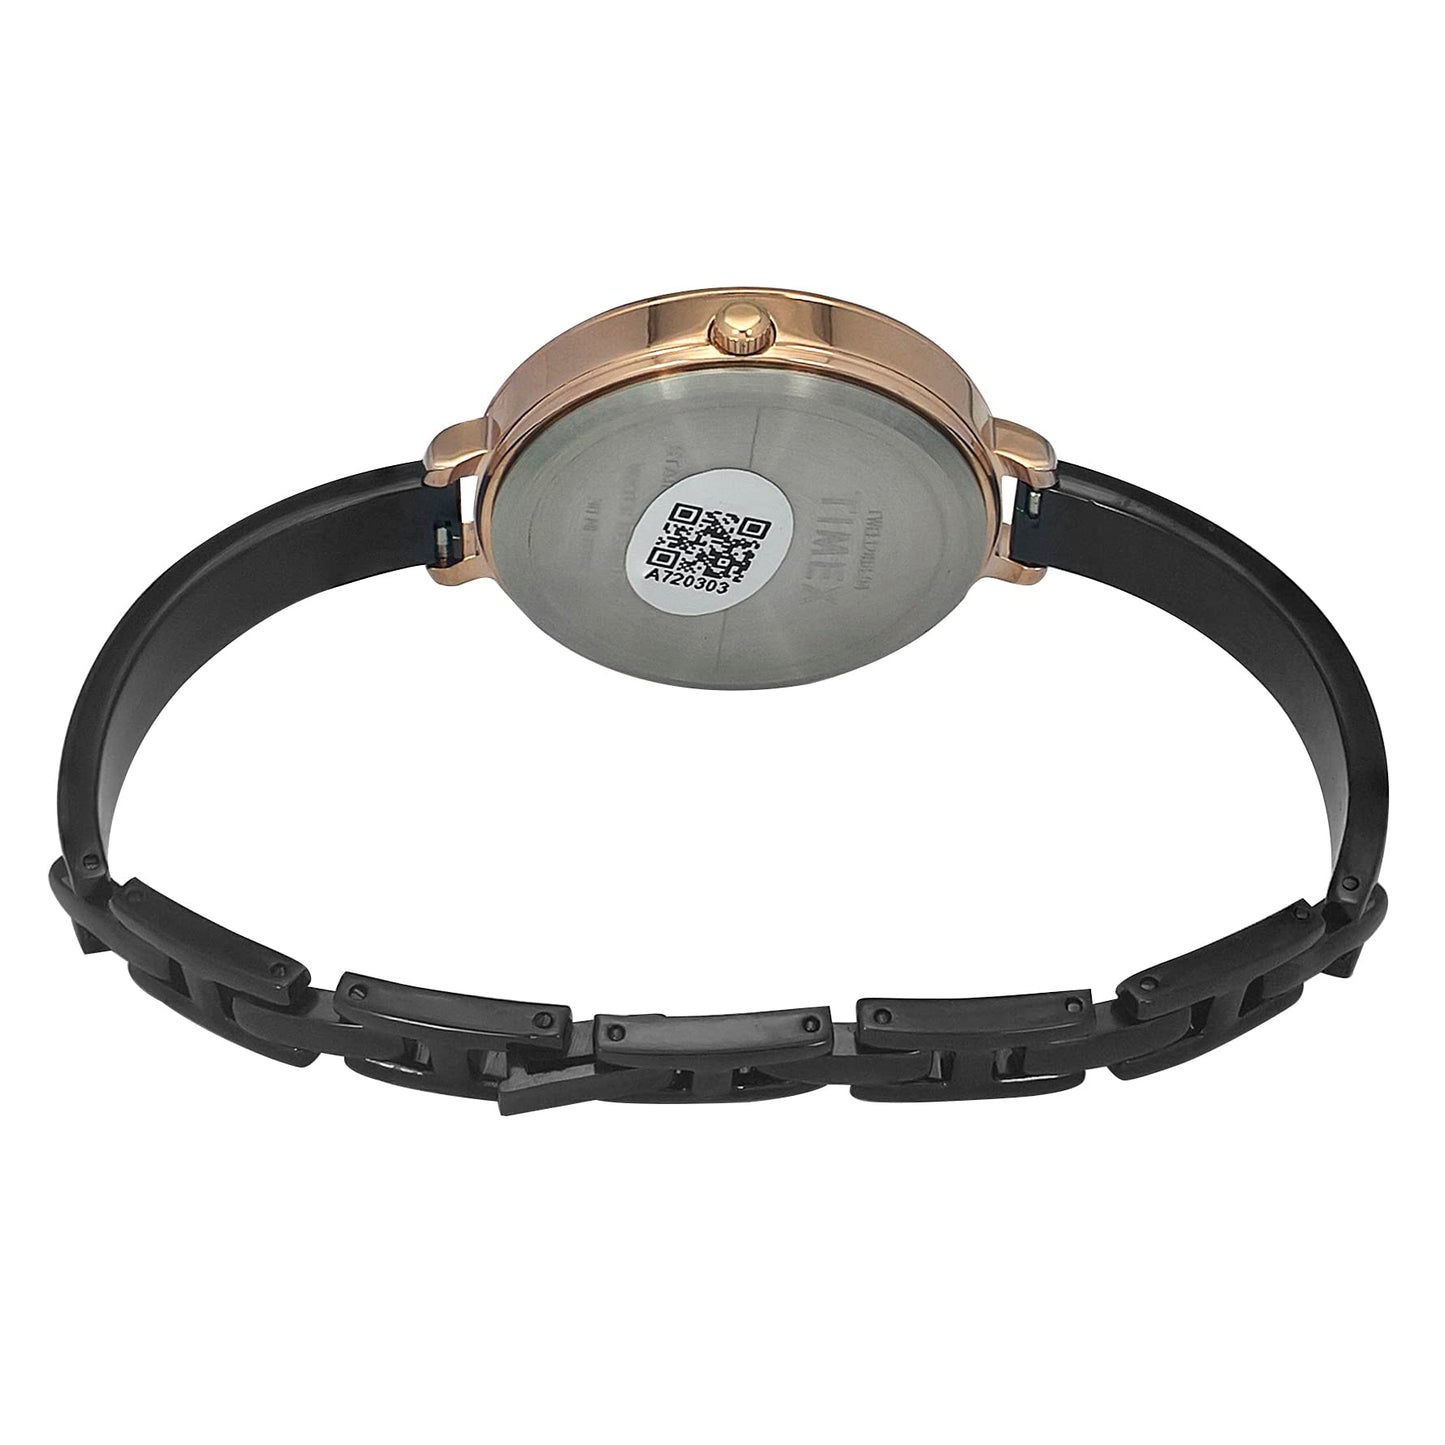 TIMEX Unisex Brass Analog Black Dial Watch-Twel12818, Band Color-Black